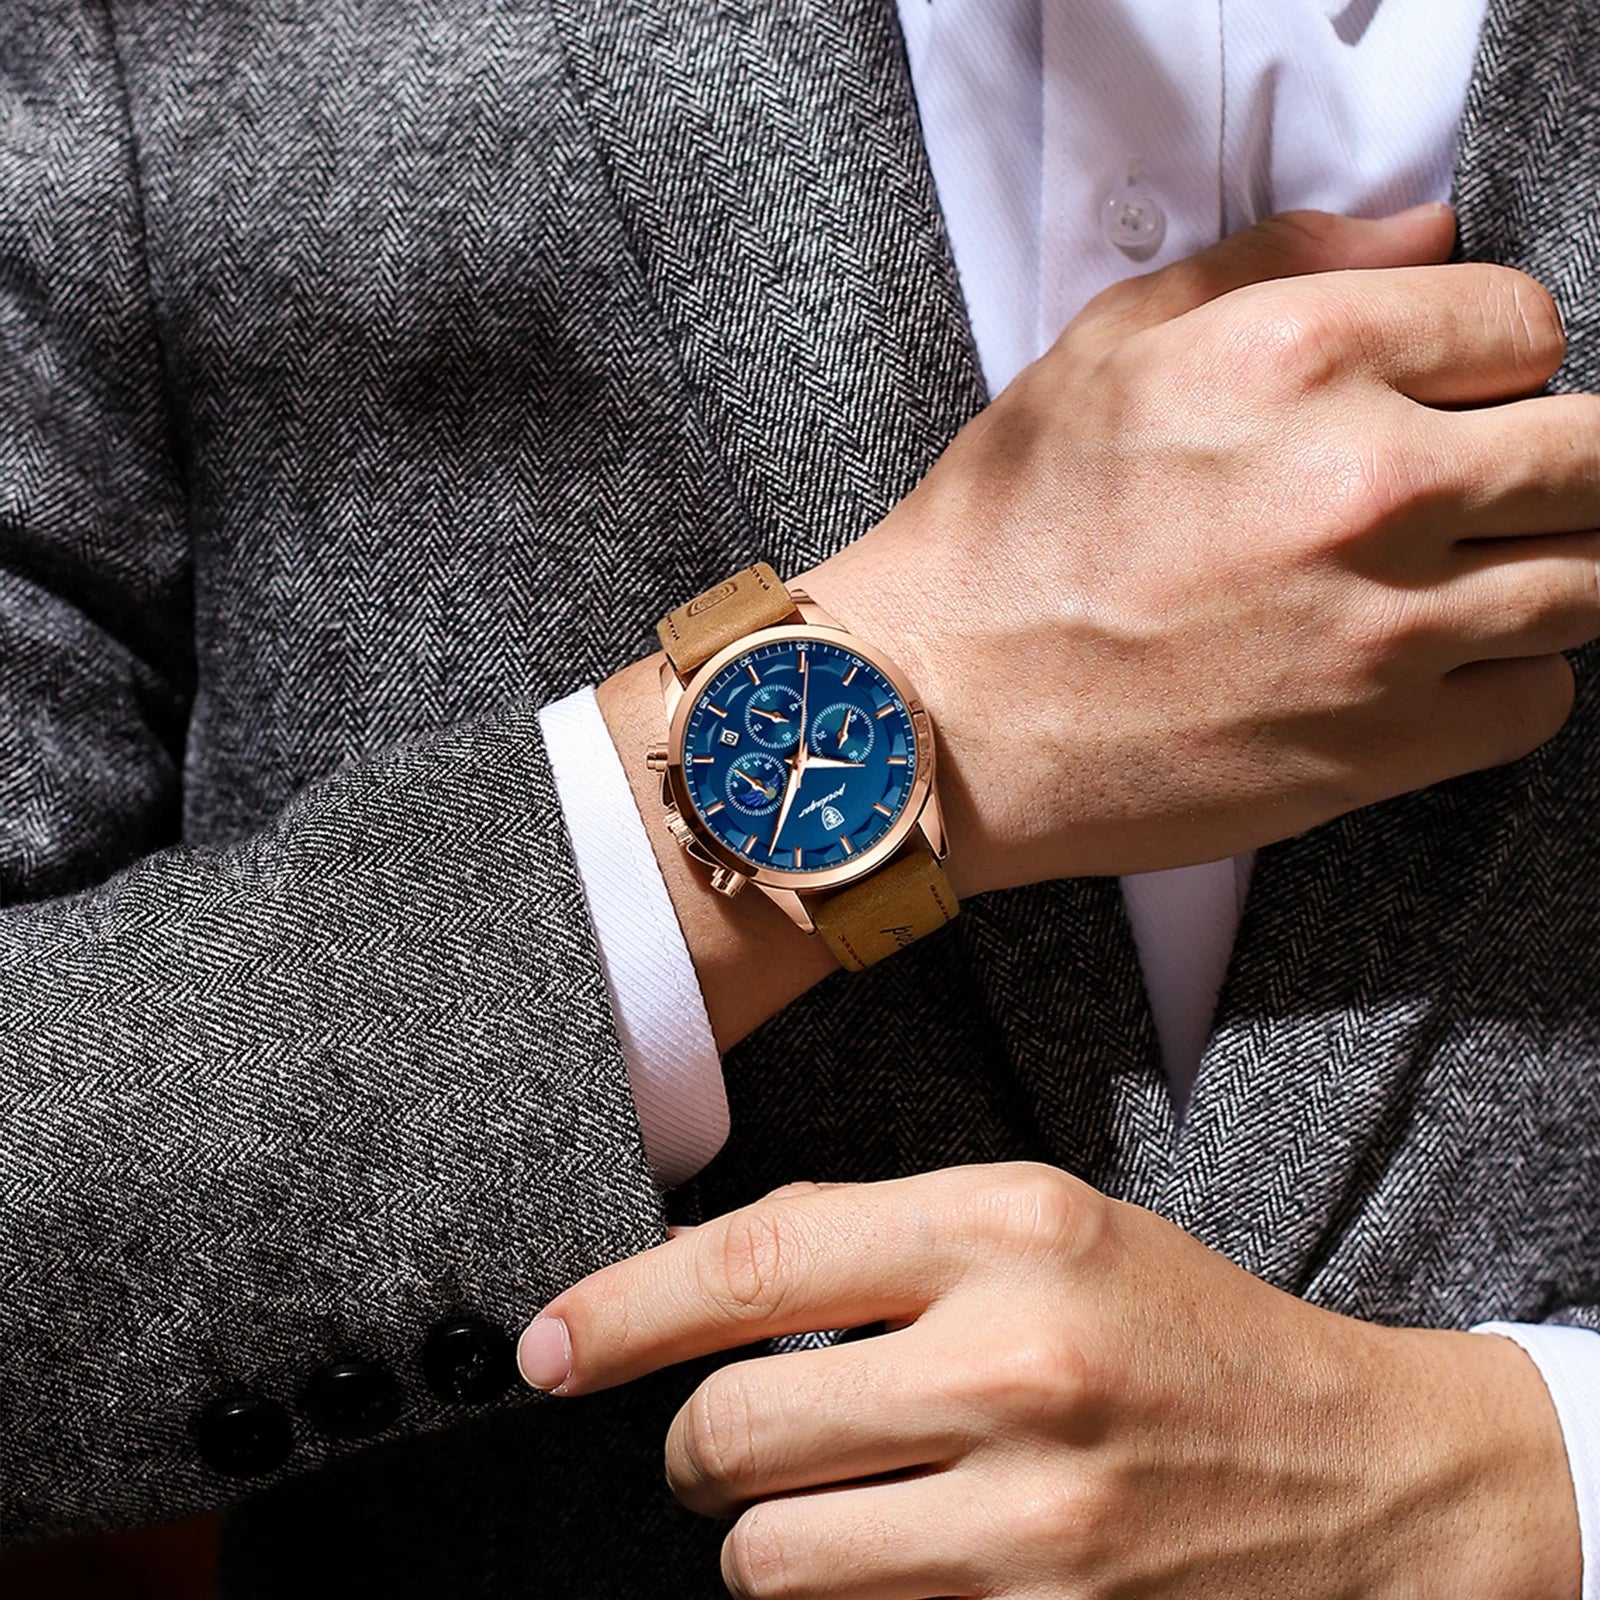 Luxury Stylish POEDAGAR Men Business Sports Waterproof Chronograph Luminous Watch